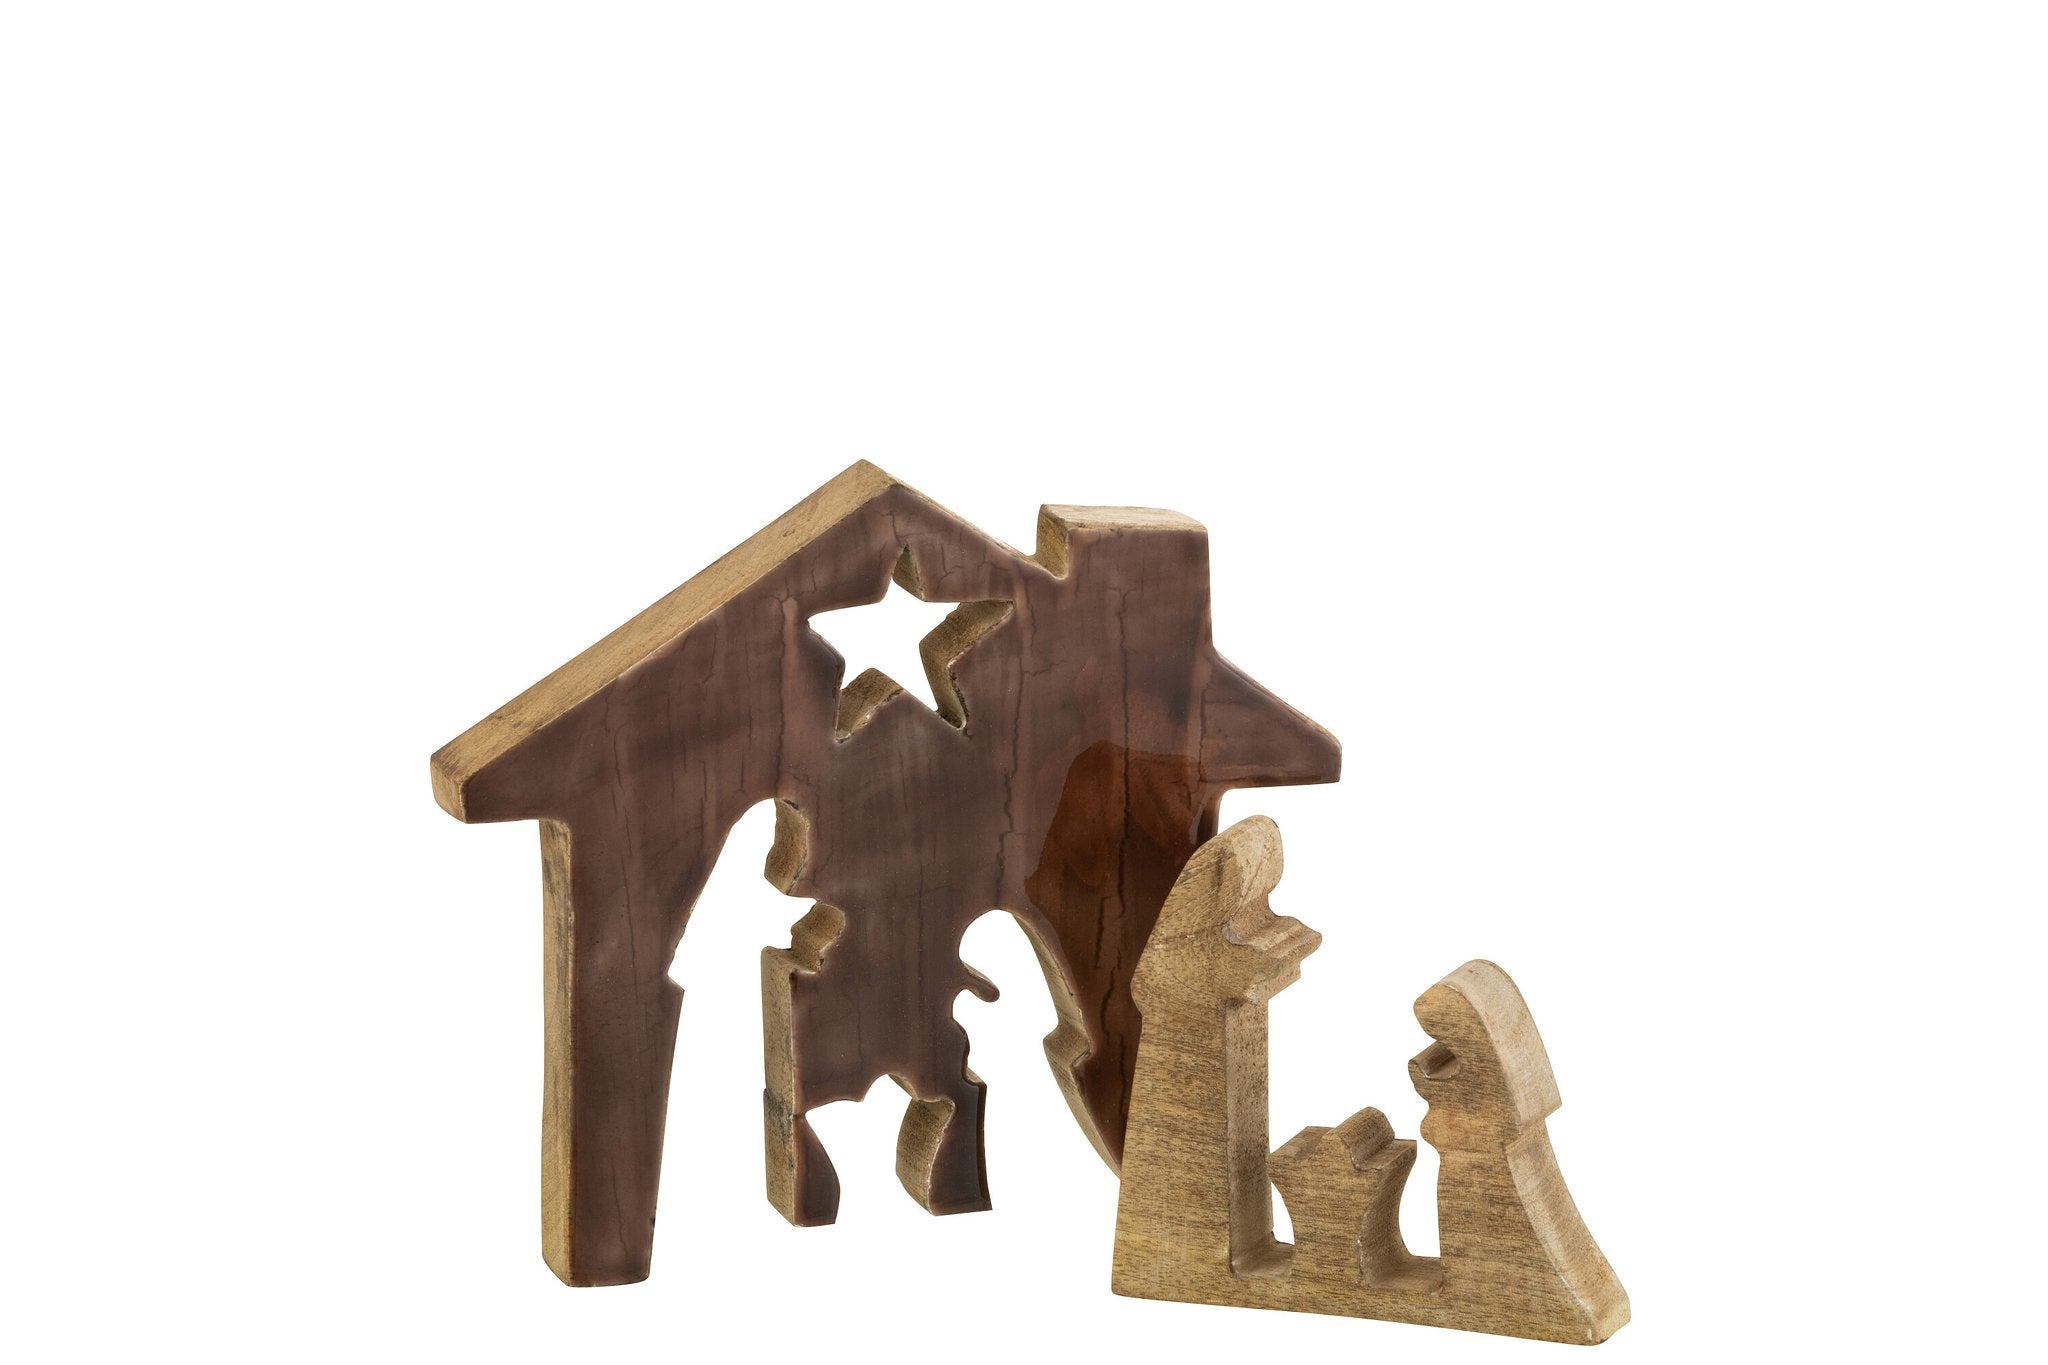 J-Line Kerstcadeau - Kribbe in huisvorm - hout, bruin, naturel - formaat large - Kerstmis decoratie